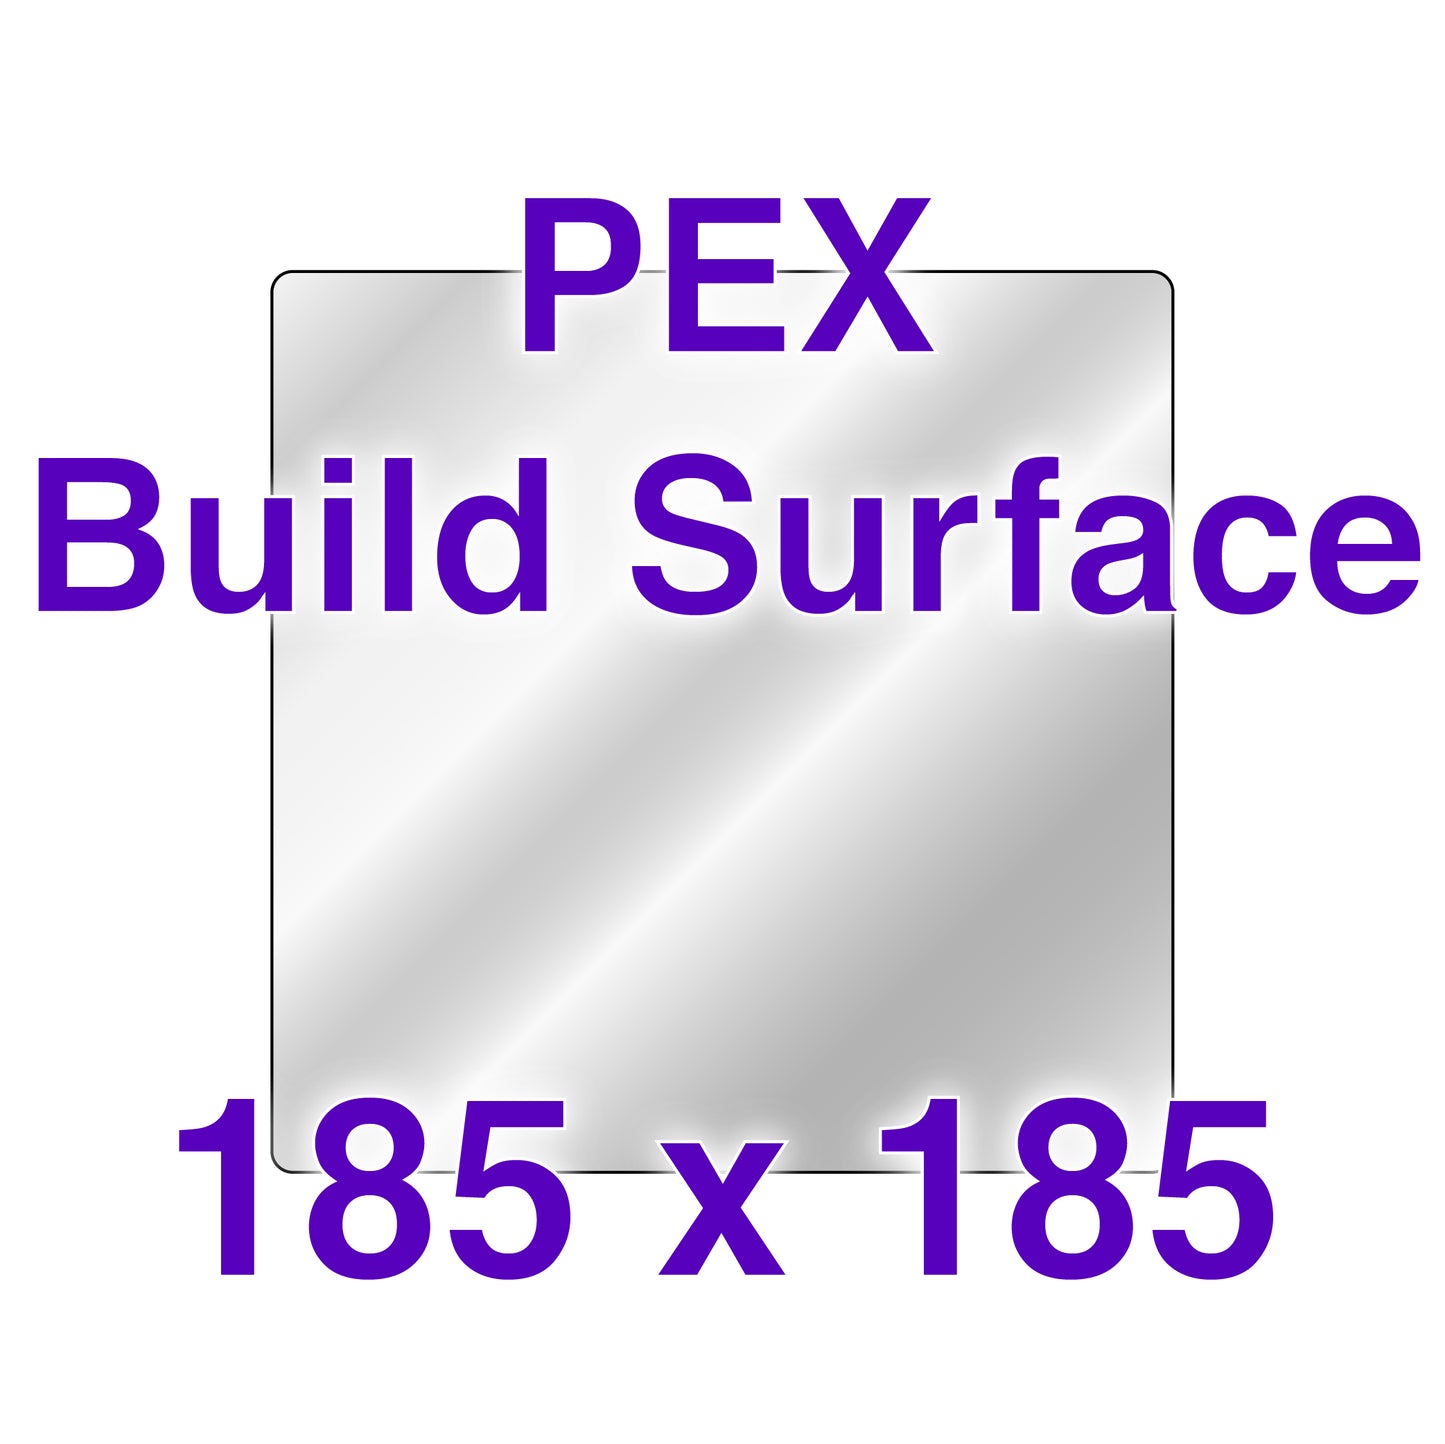 PEX Build Surface - 185 x 185